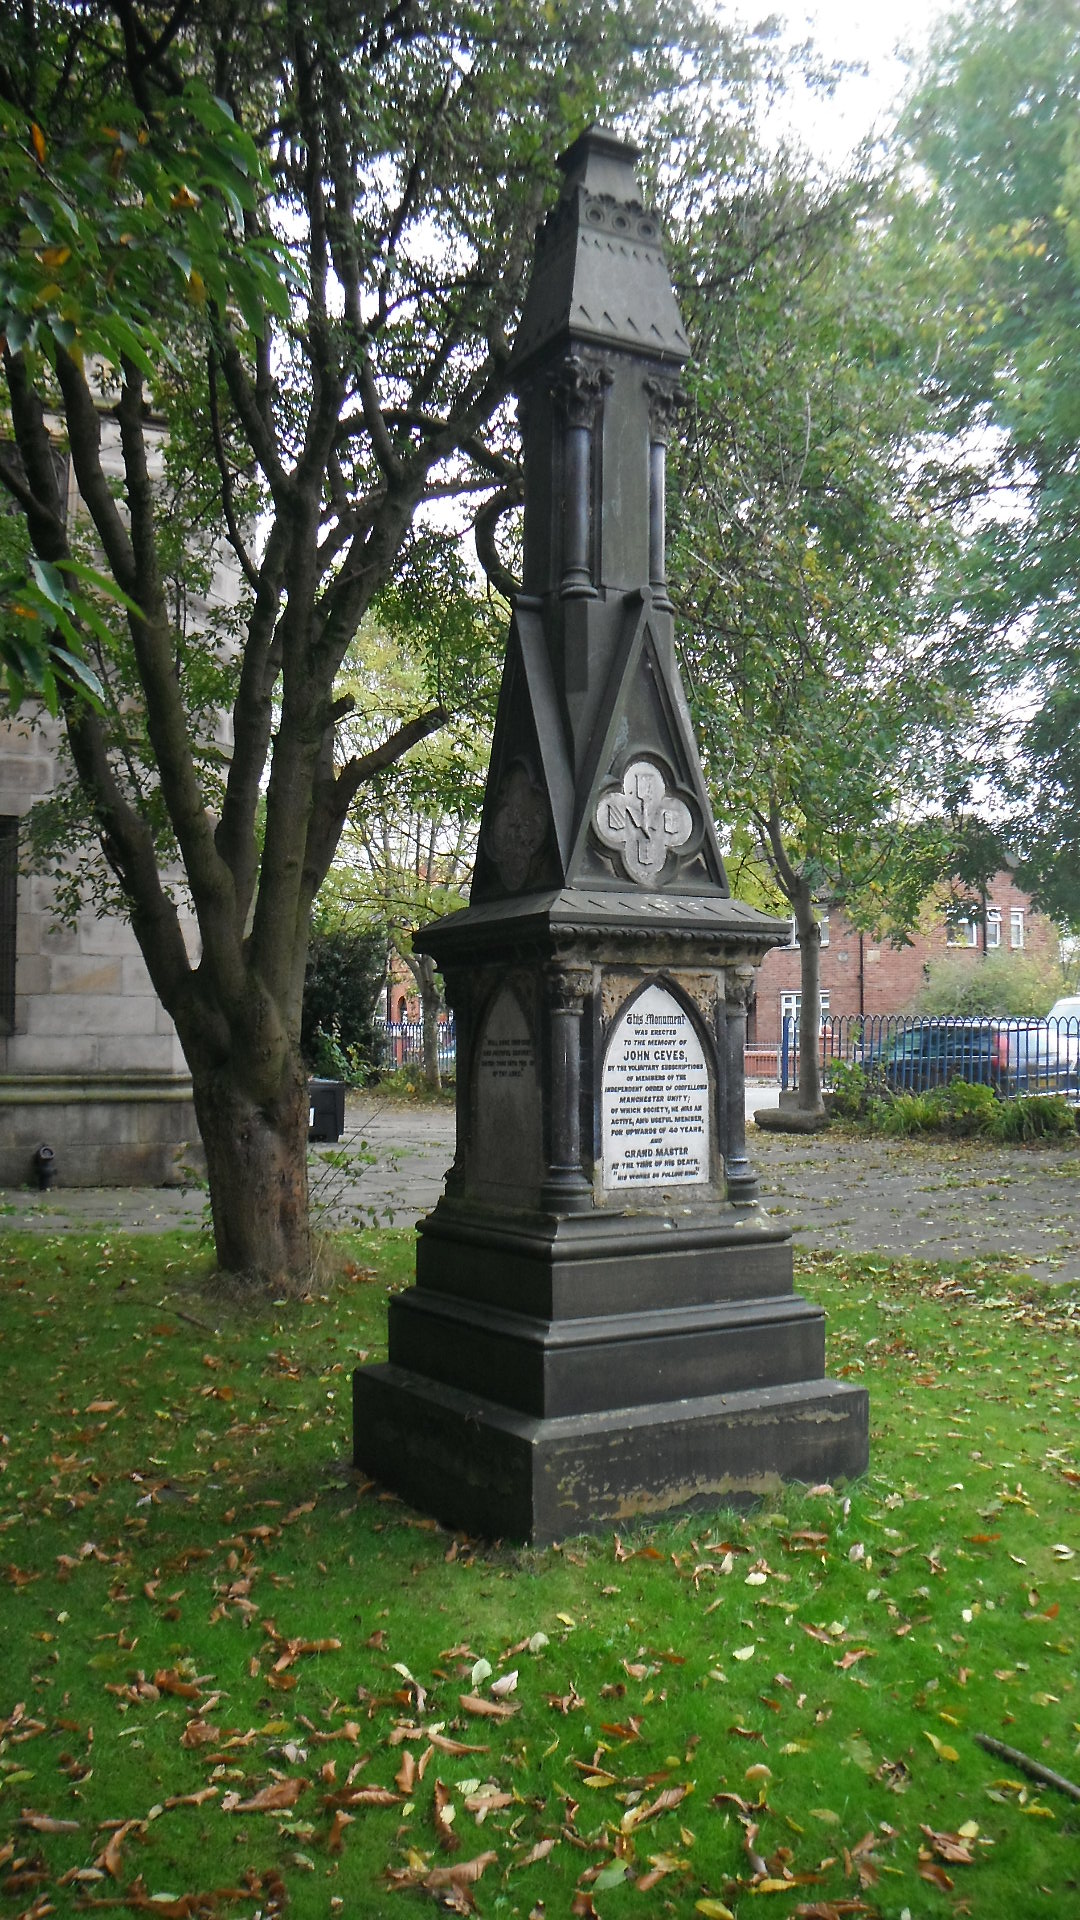 Photo taken by me  All Saint Church Grave Marker - Newton Heath, Manchester